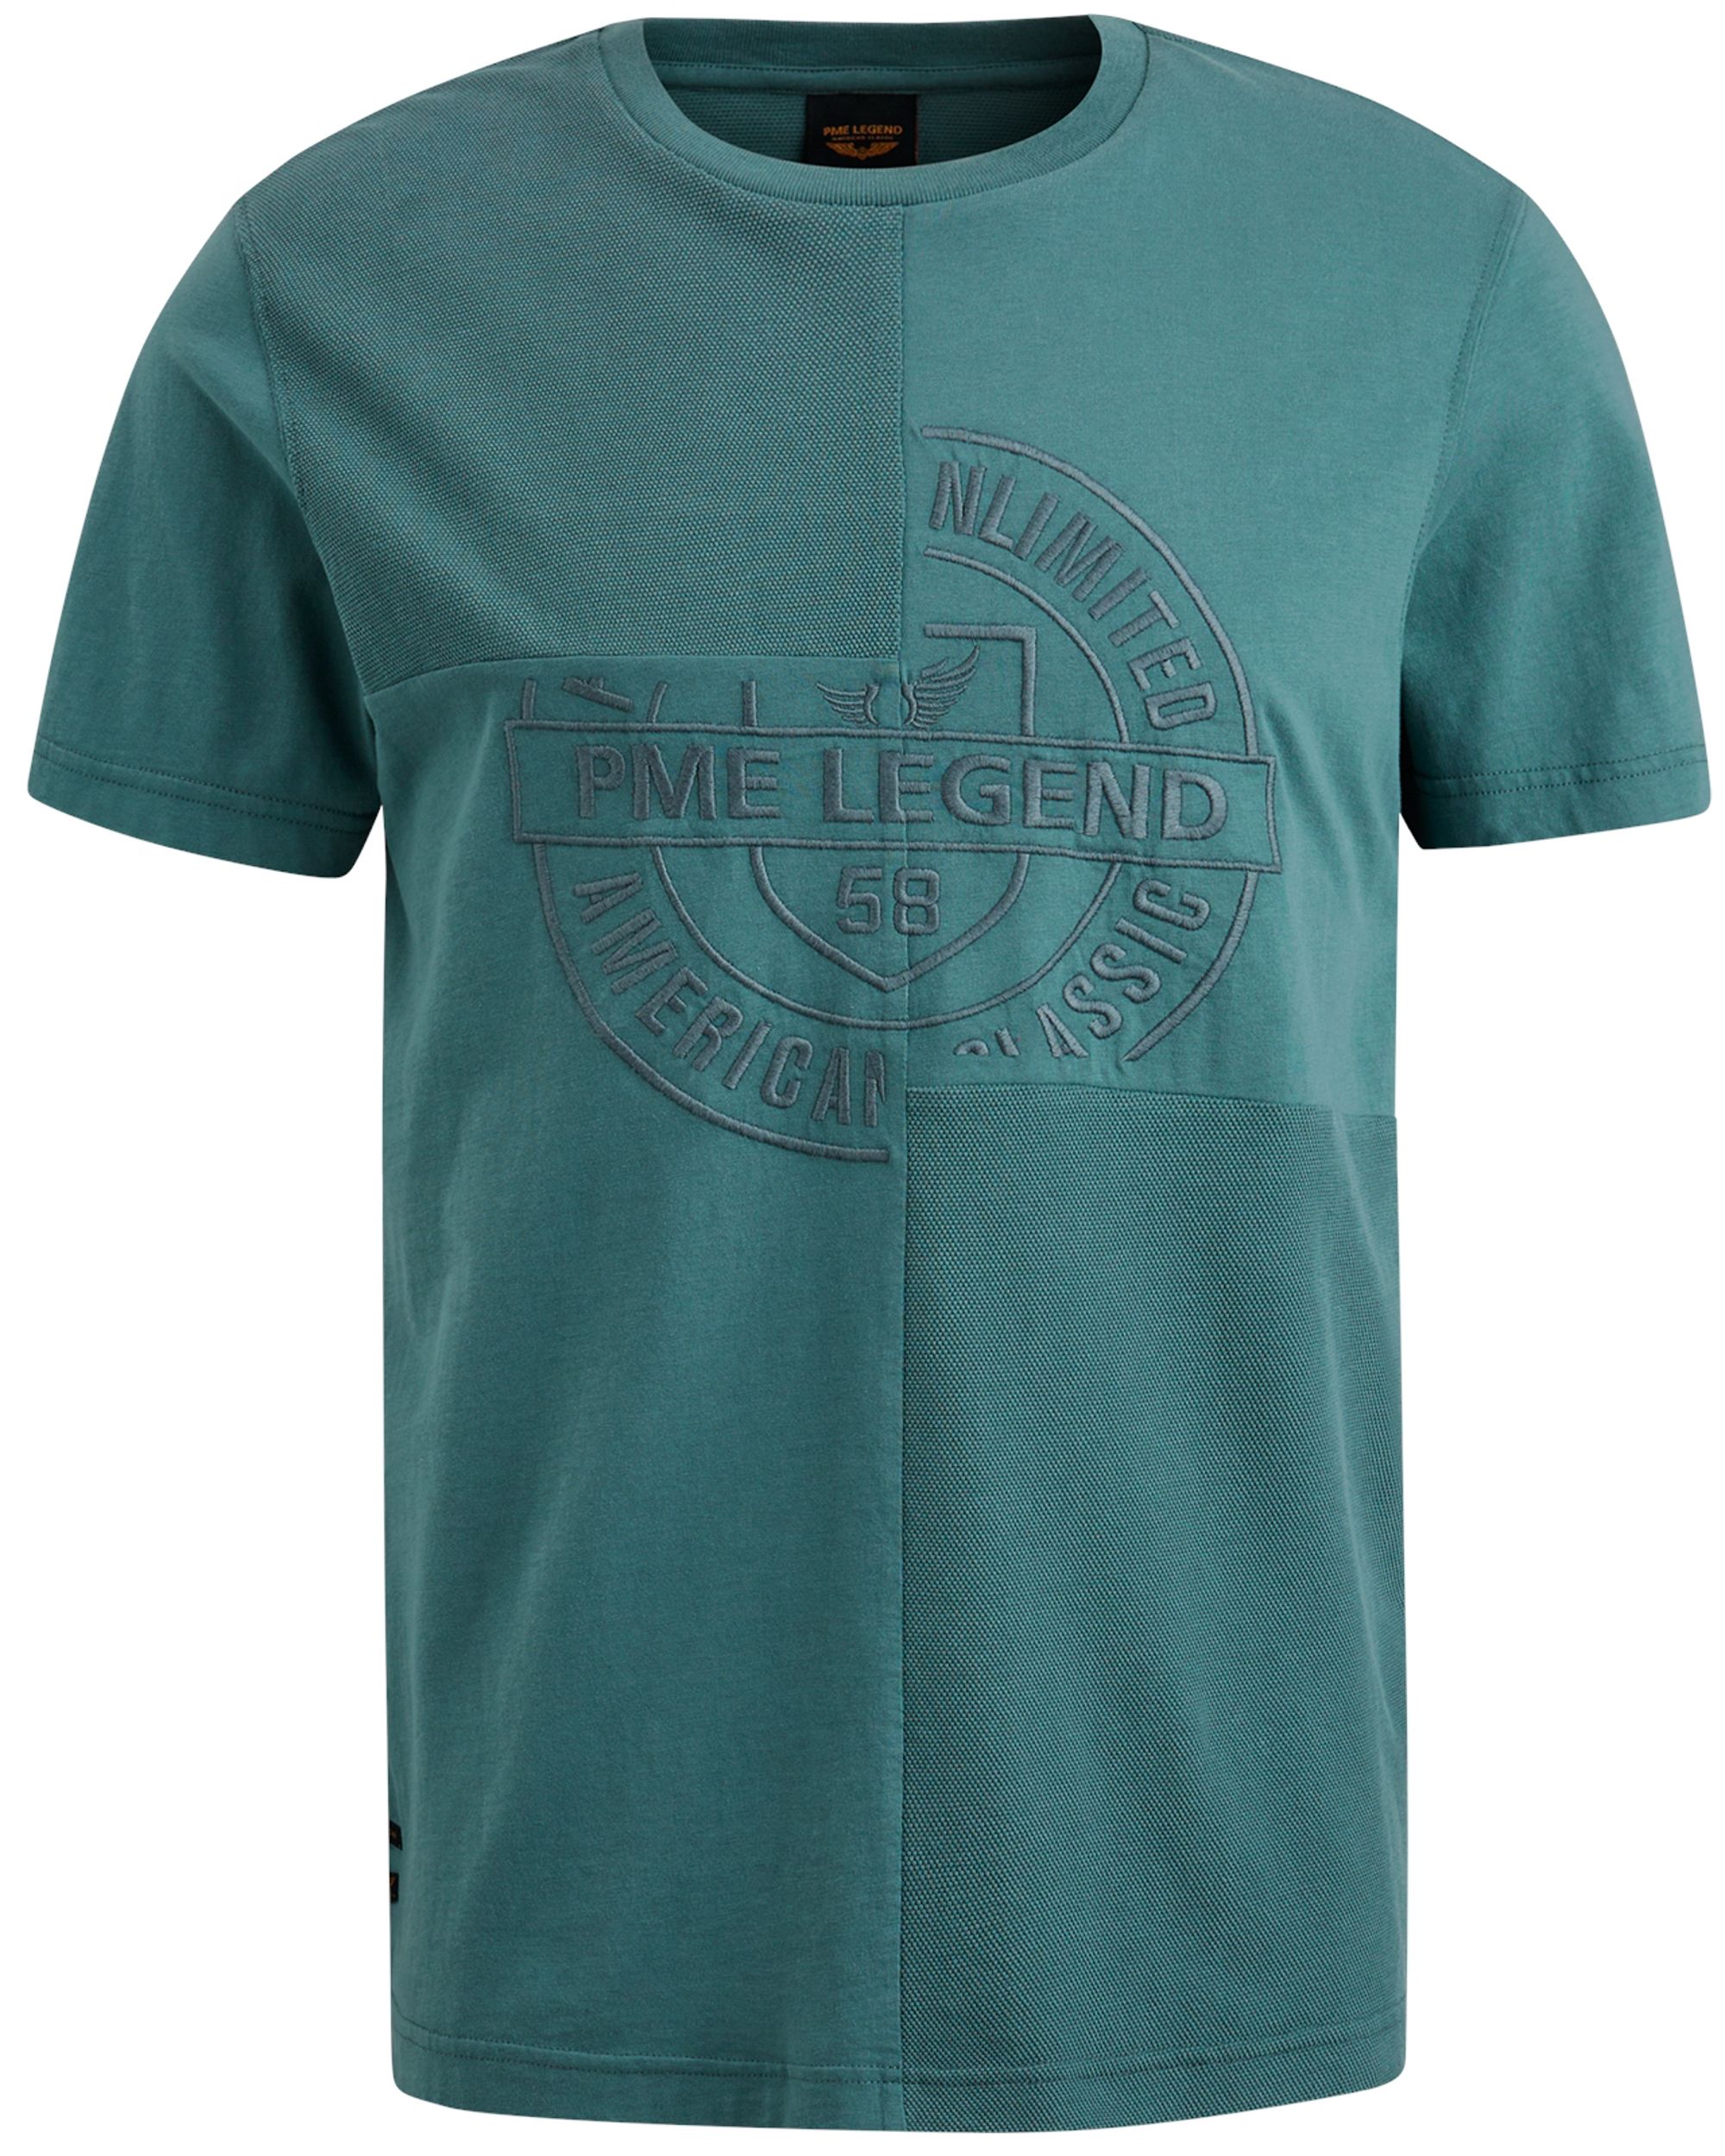 PME Legend T-shirt KM Grijs 092520-001-L